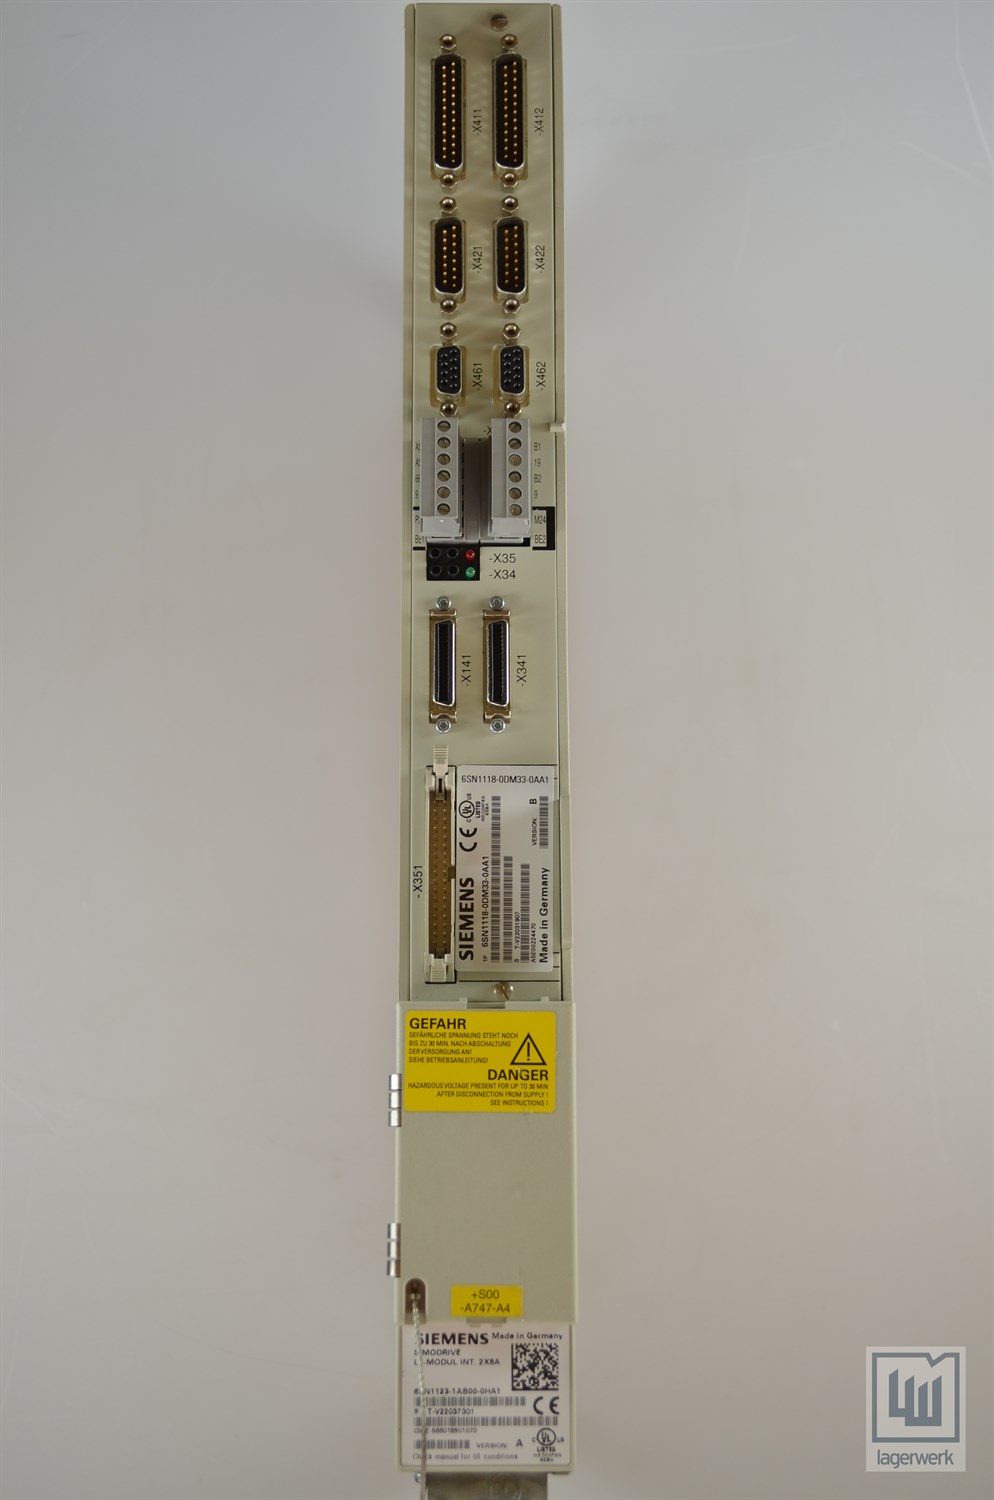 Siemens Simodrive 611 LT Module 2x8a type 6sn1123-1ab00-0ha1 Ver sans prise A